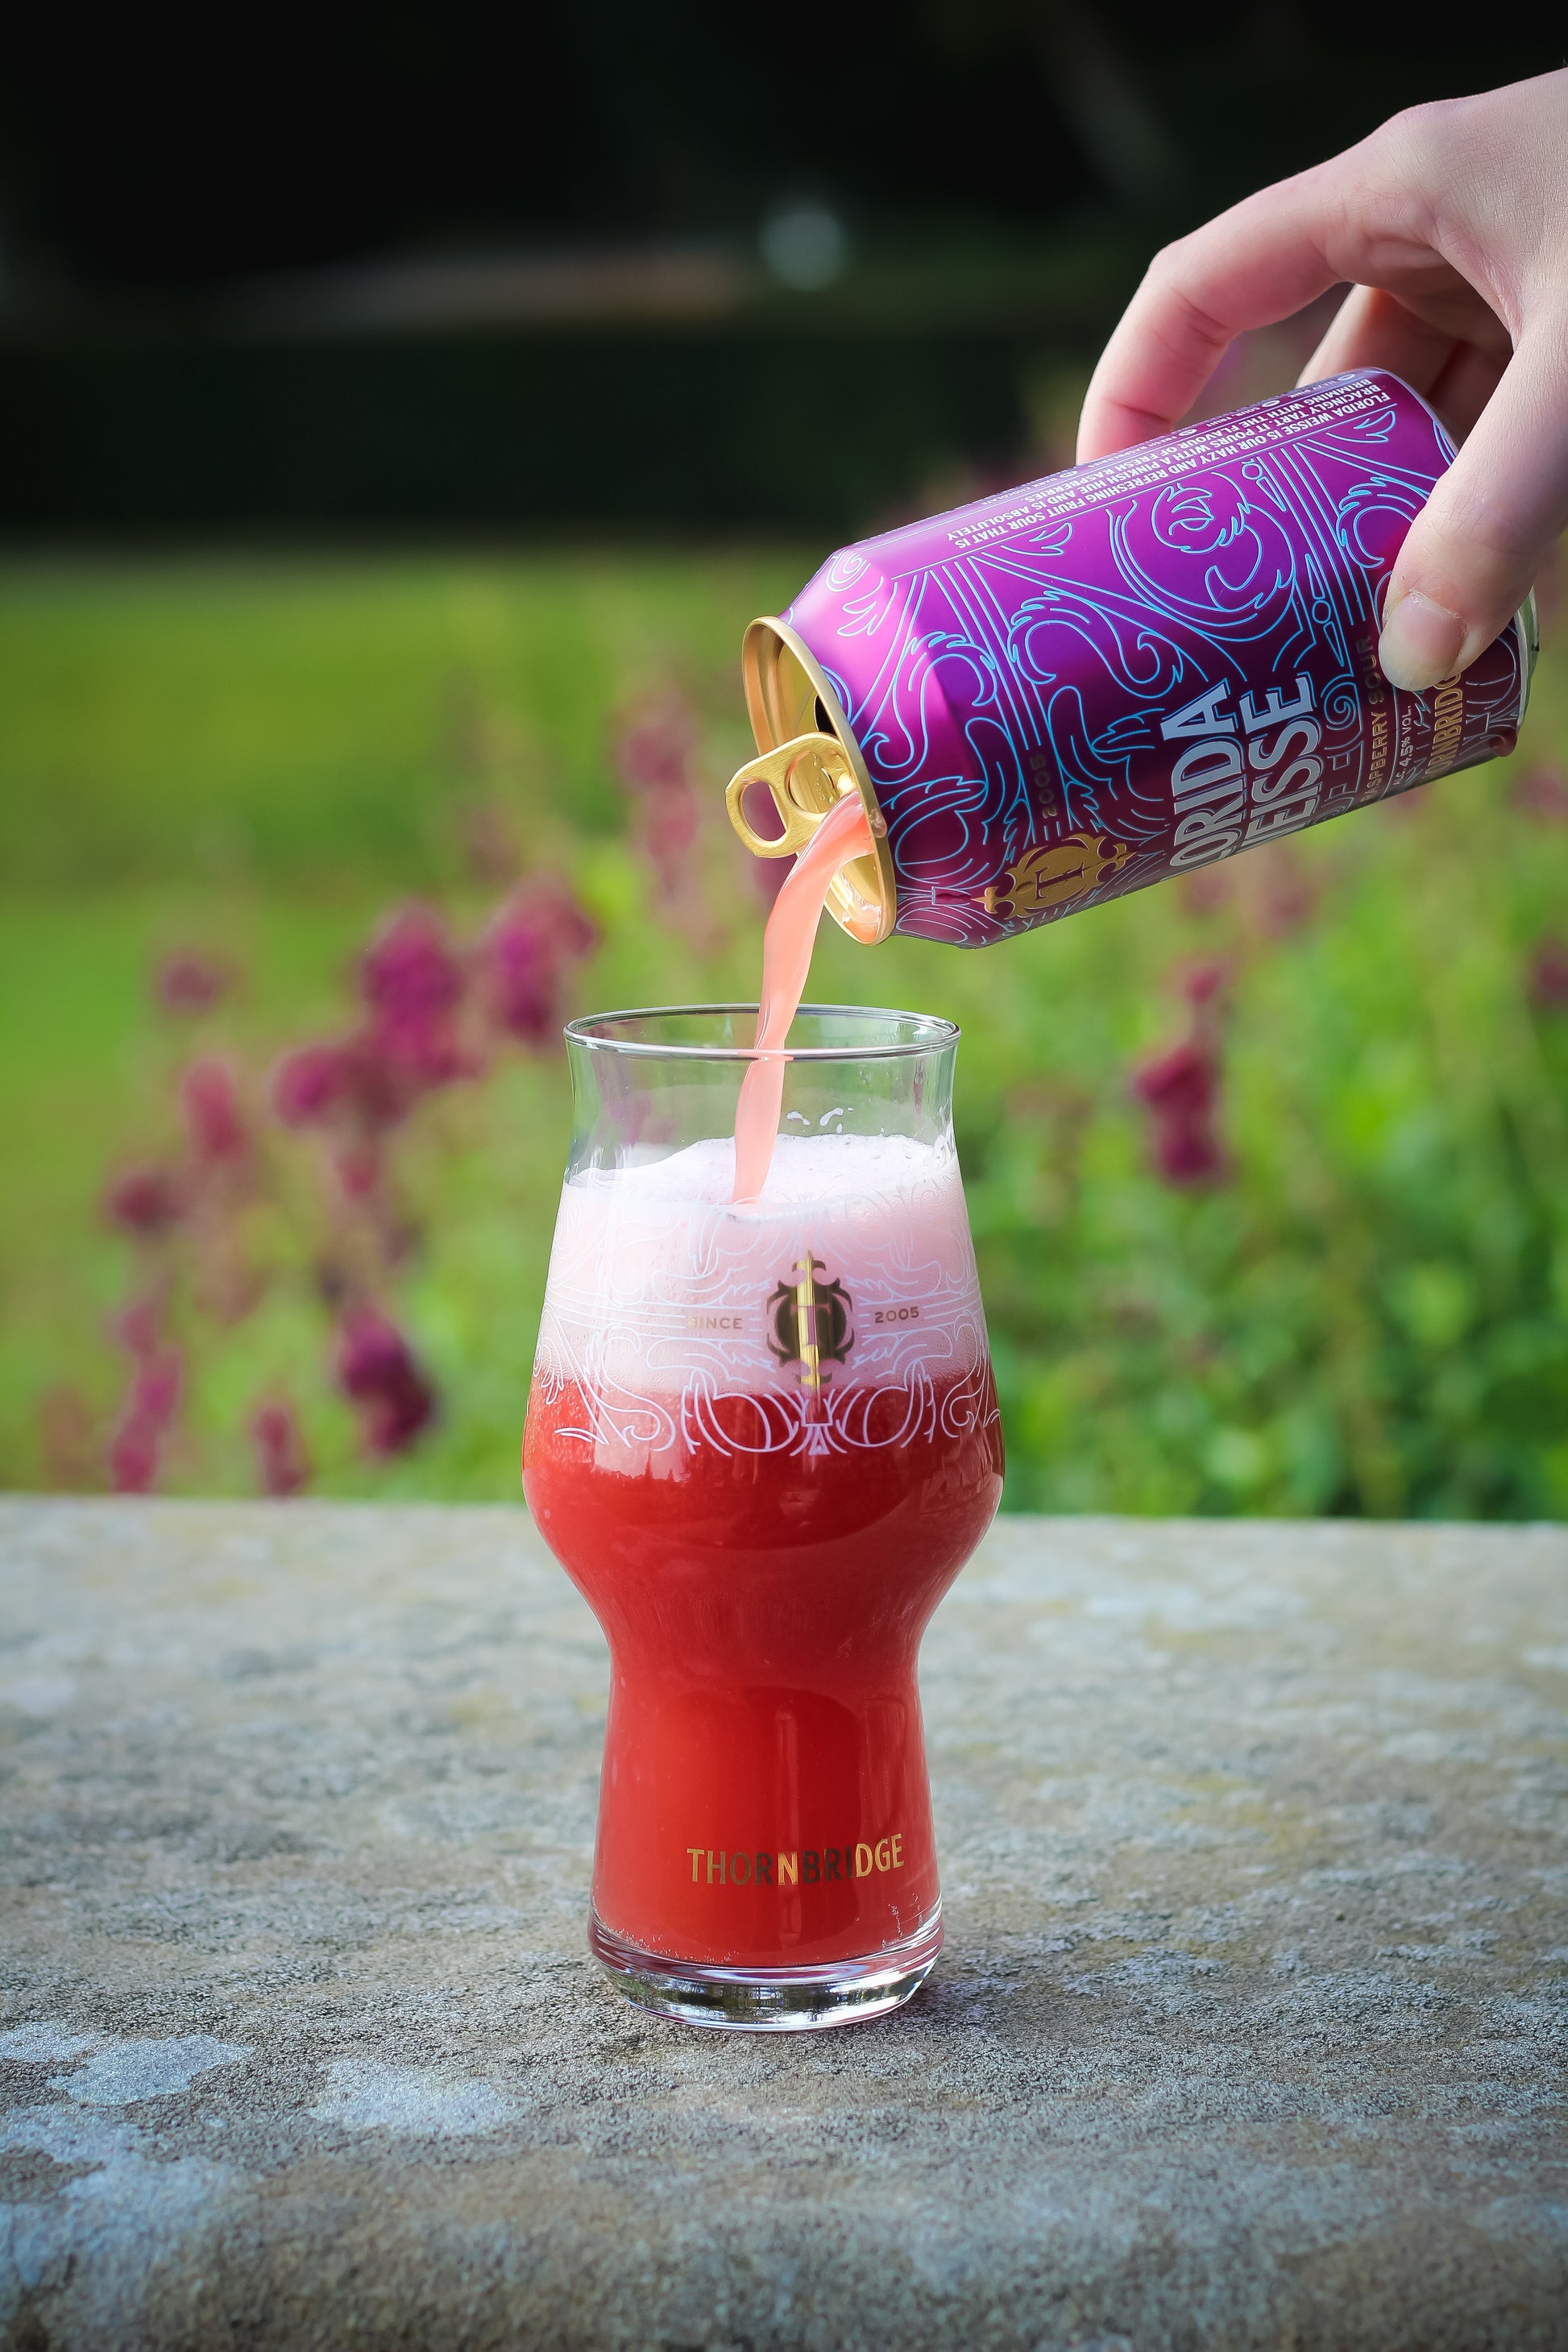 Florida Weisse, 4.5% Hazy Raspberry Sour 330ml can Beer - Single Can Thornbridge